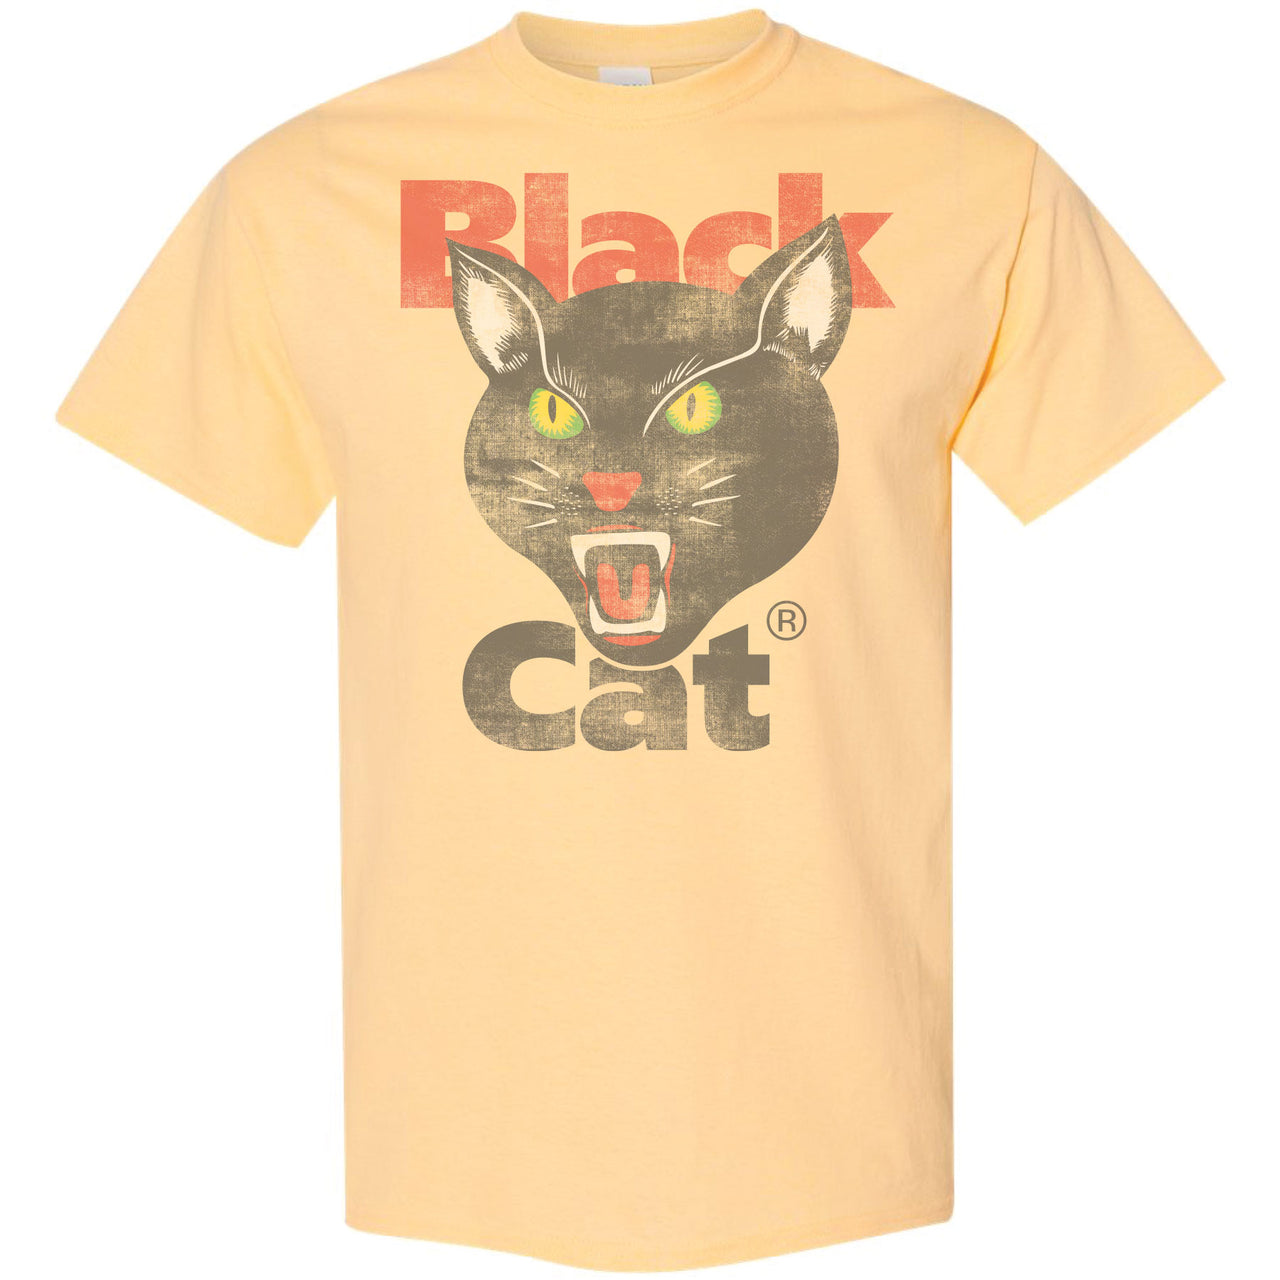 Black Cat - Black Cat Logo T-shirt